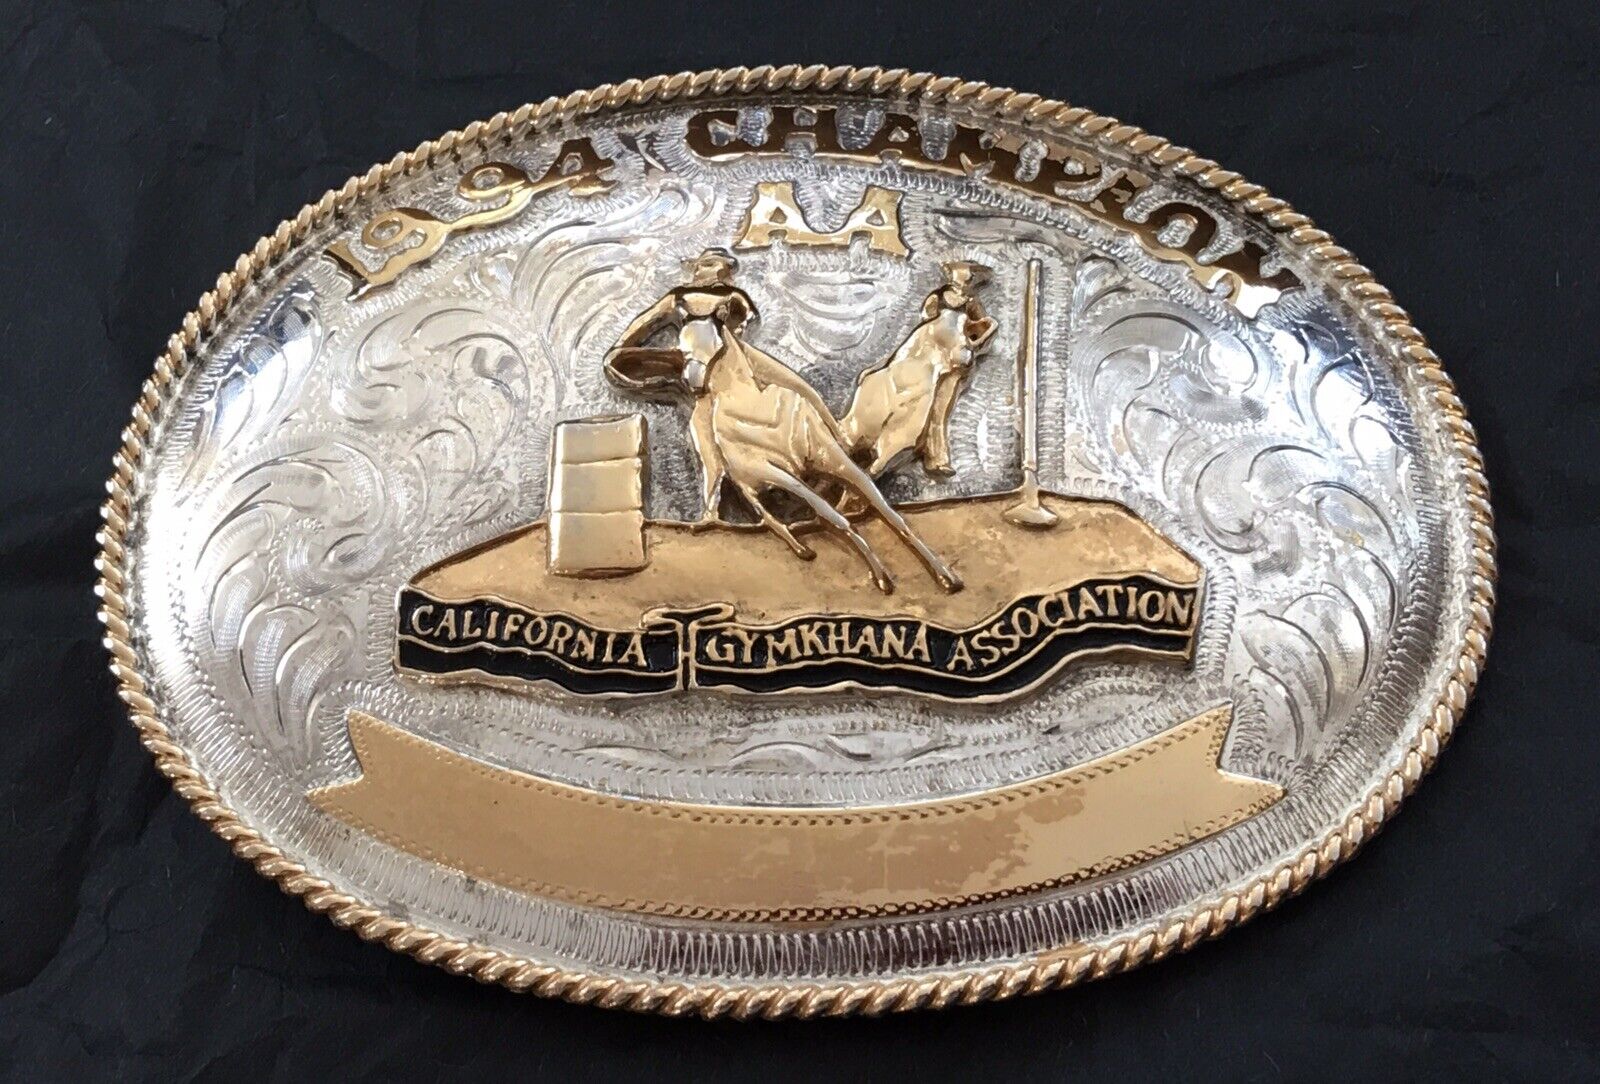 Huge 1994 Champion AA California GYMKHANA Cowboy Rodeo Trophy Belt Buckle